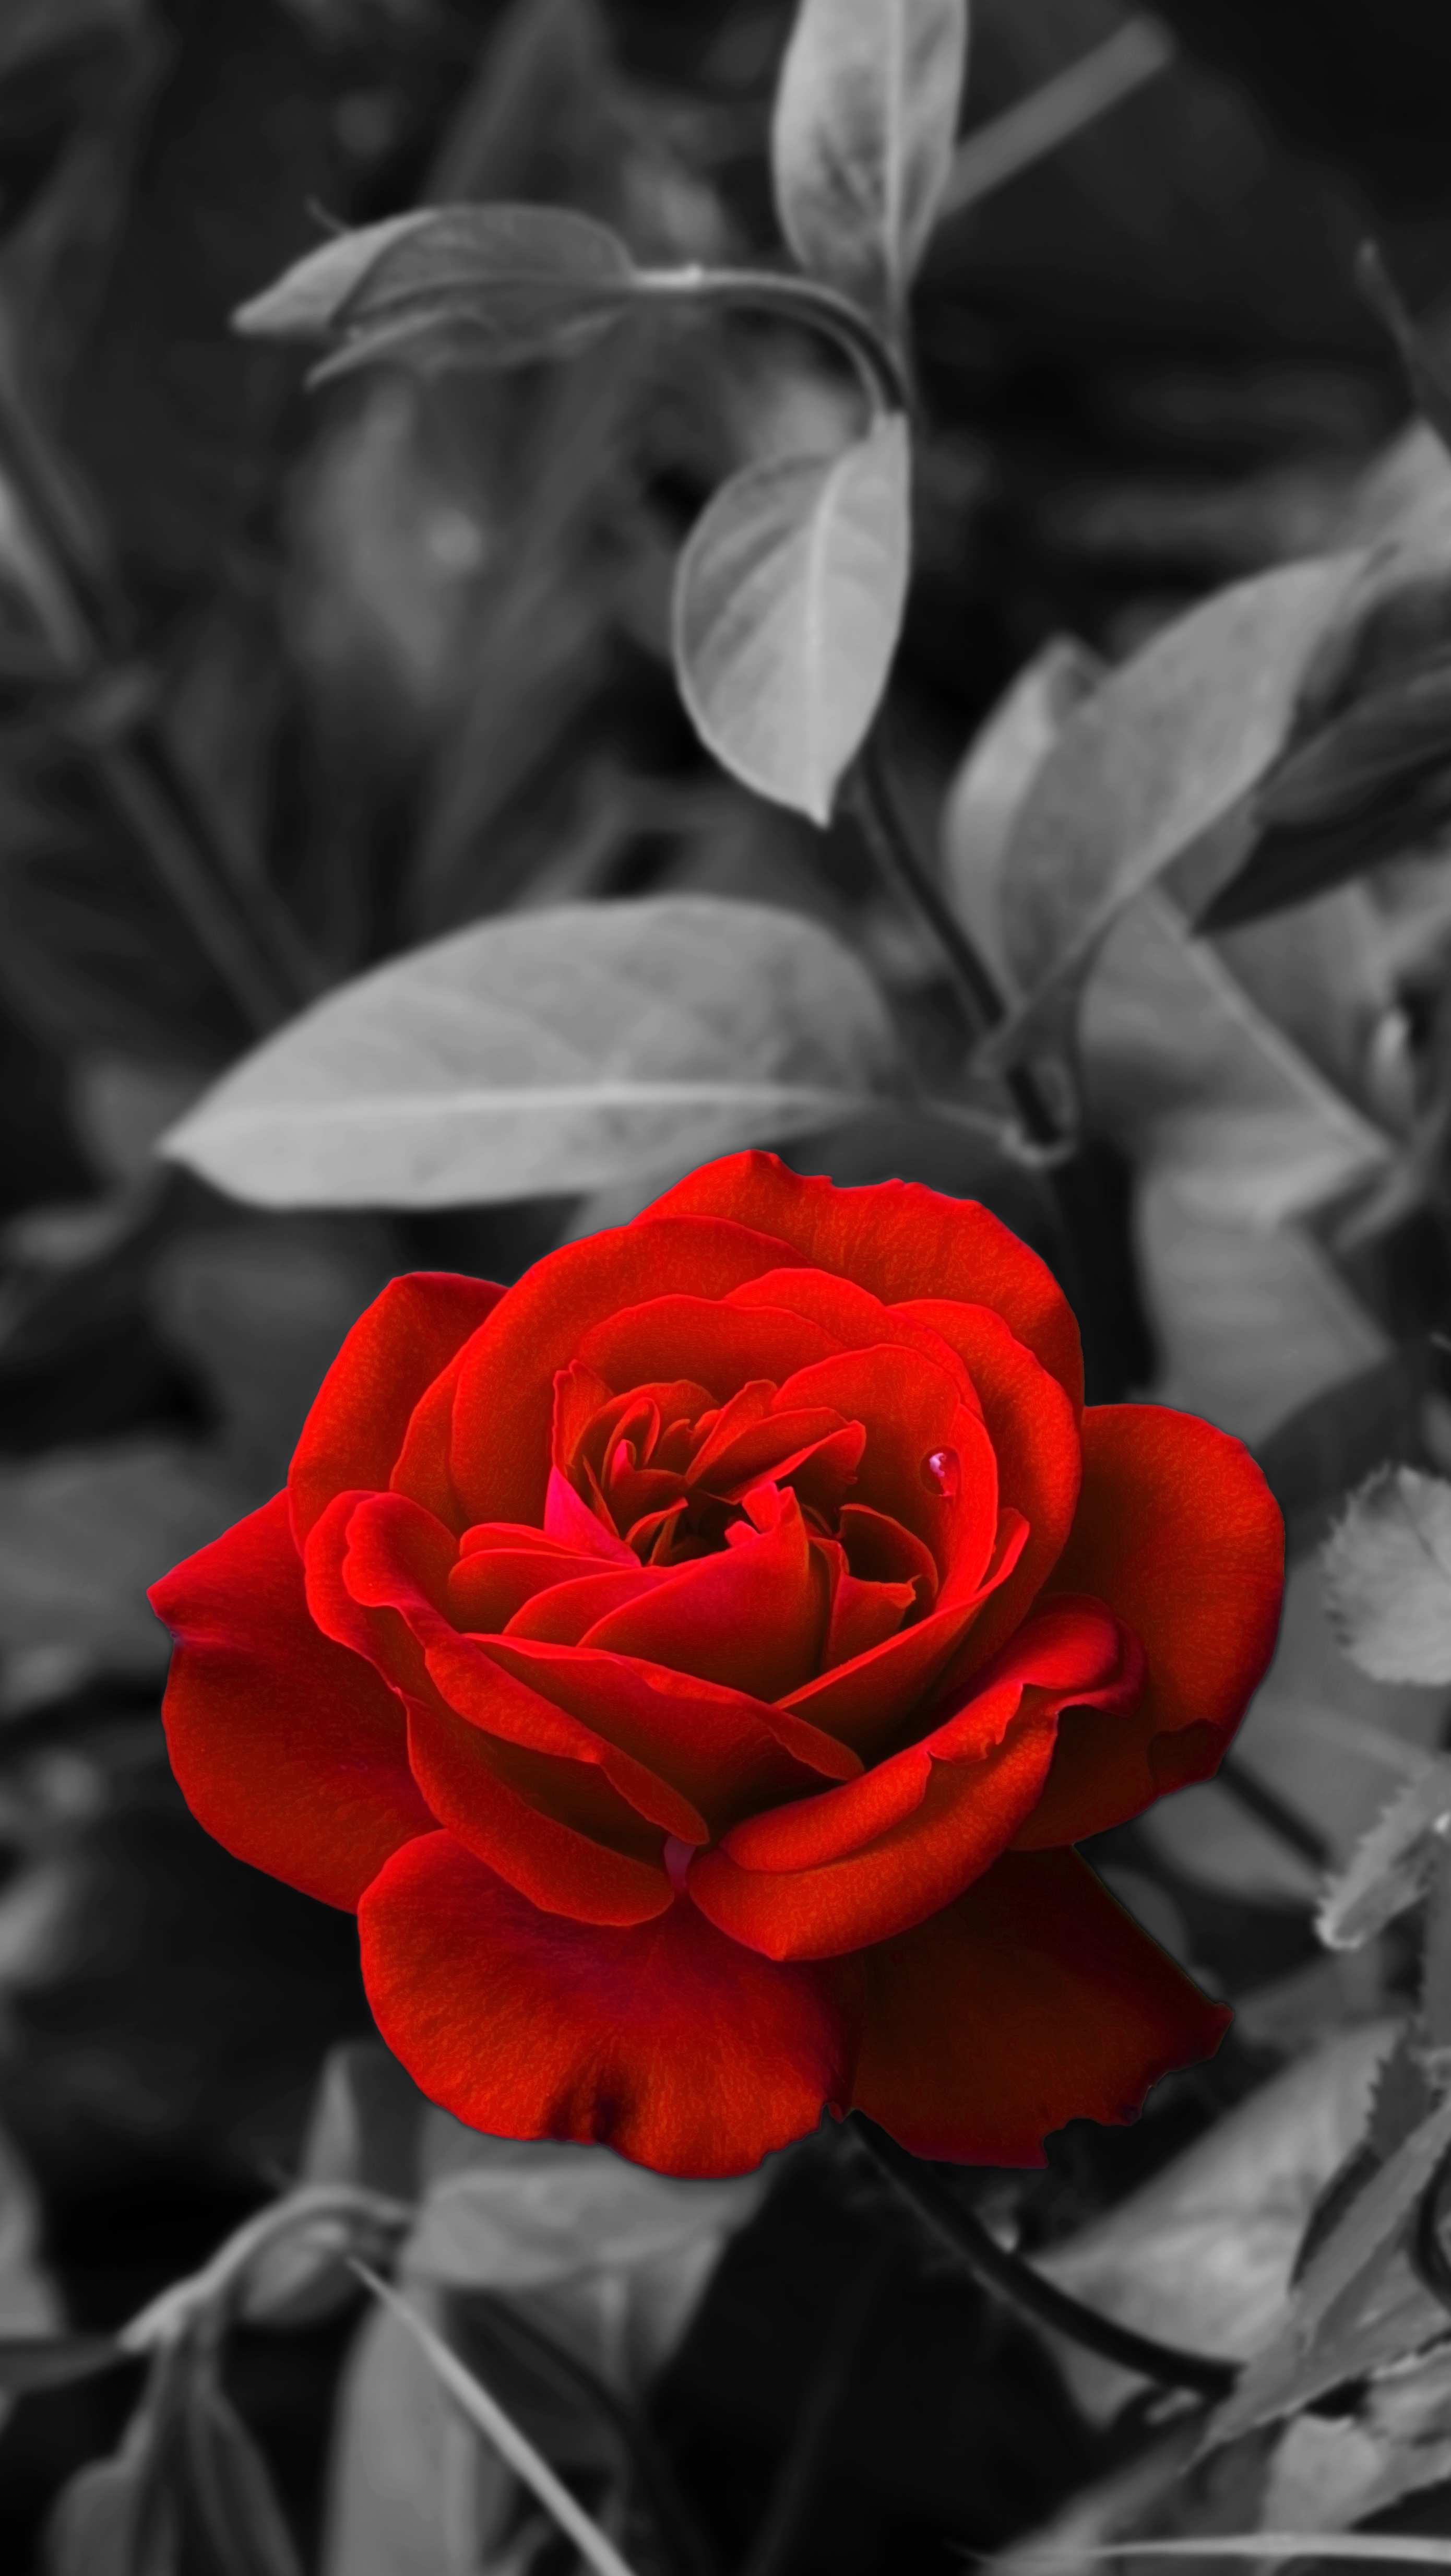 chb, flowers, rose, red, rose flower, bud, bw, garden High Definition image